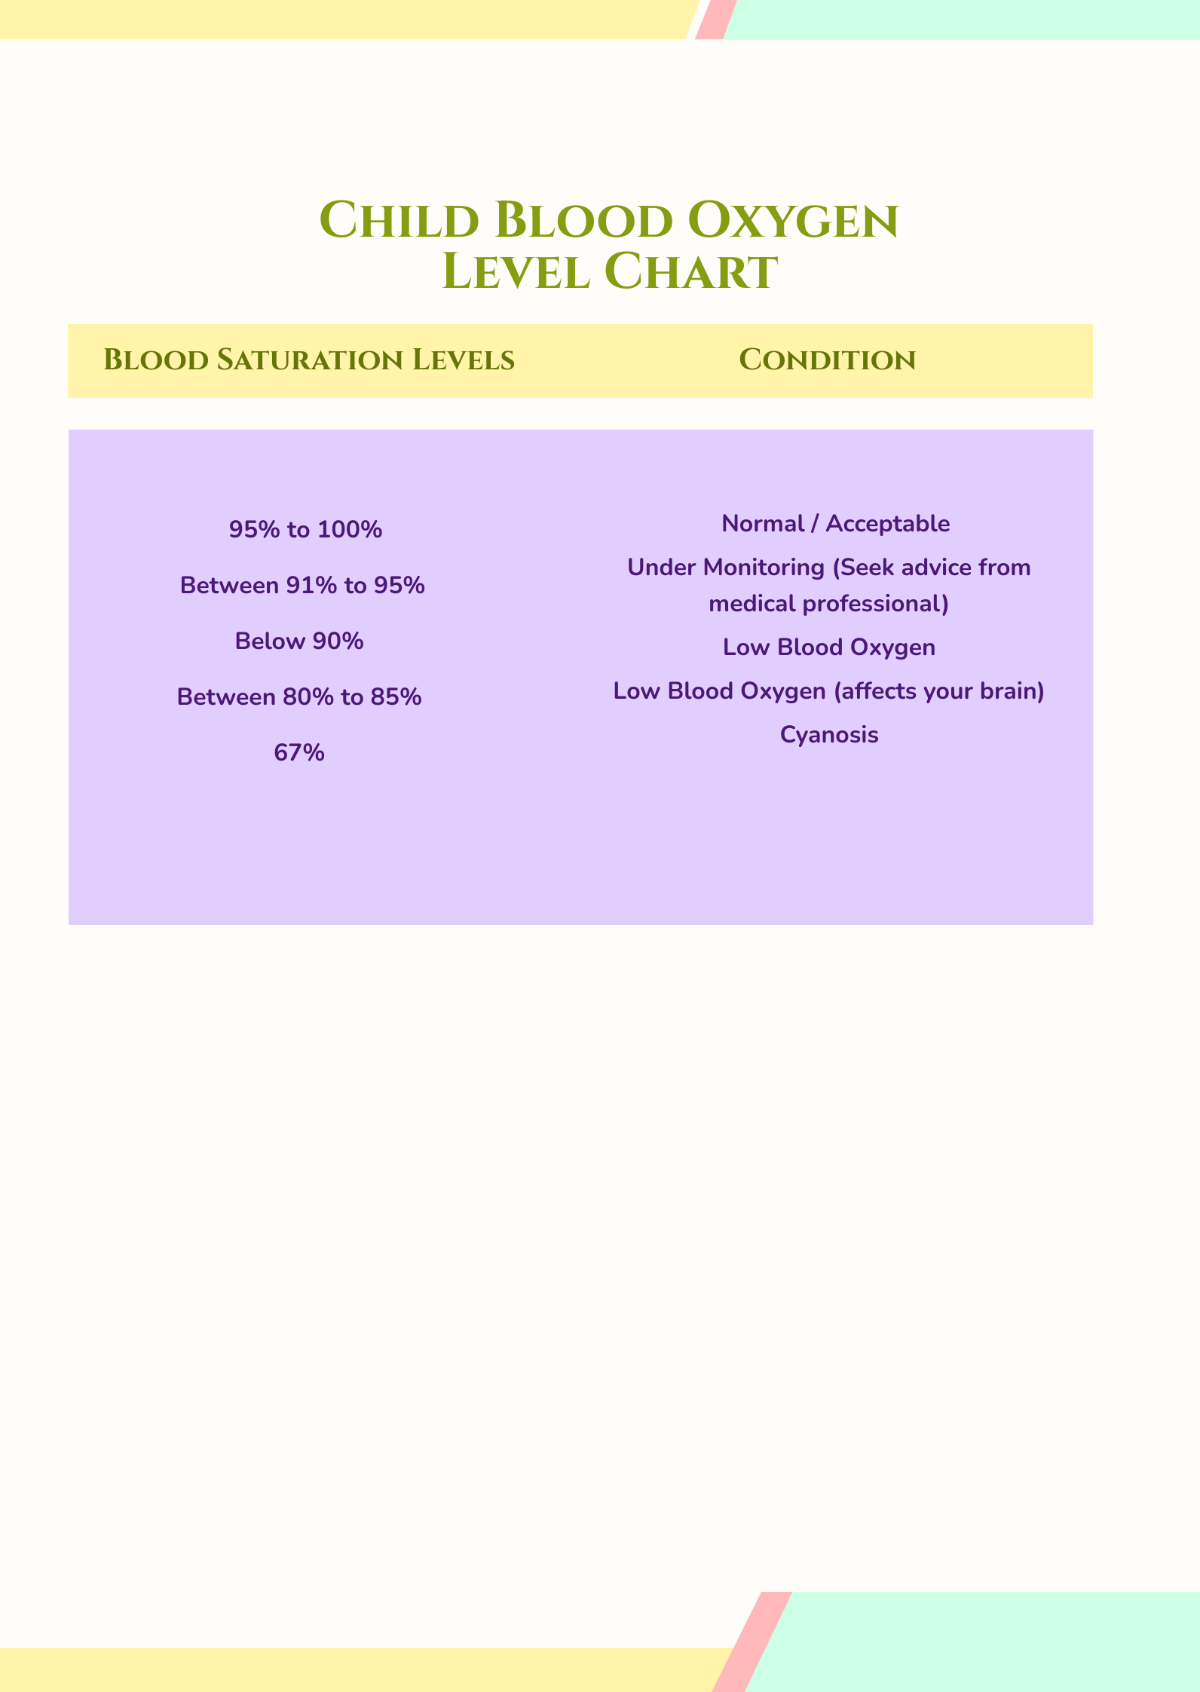 Child Blood Oxygen Level Chart Template